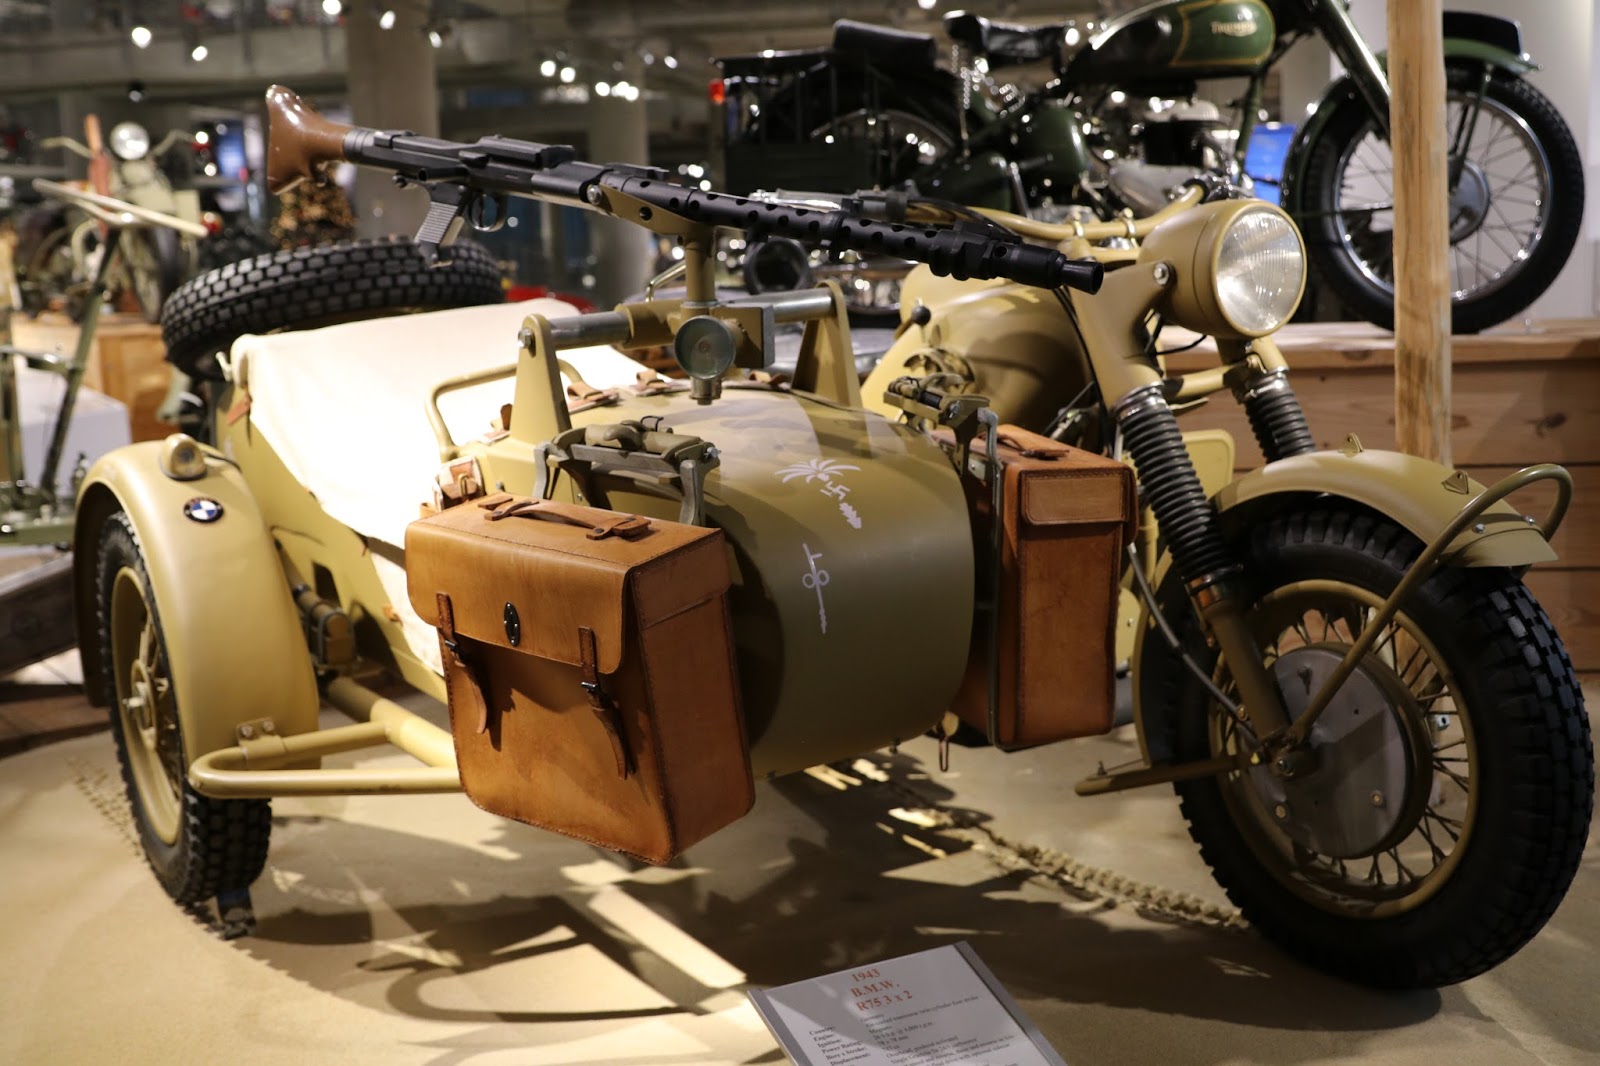 oldmotodude-1943-bmw-r75-military-motorcycle-with-sidecar-on-display